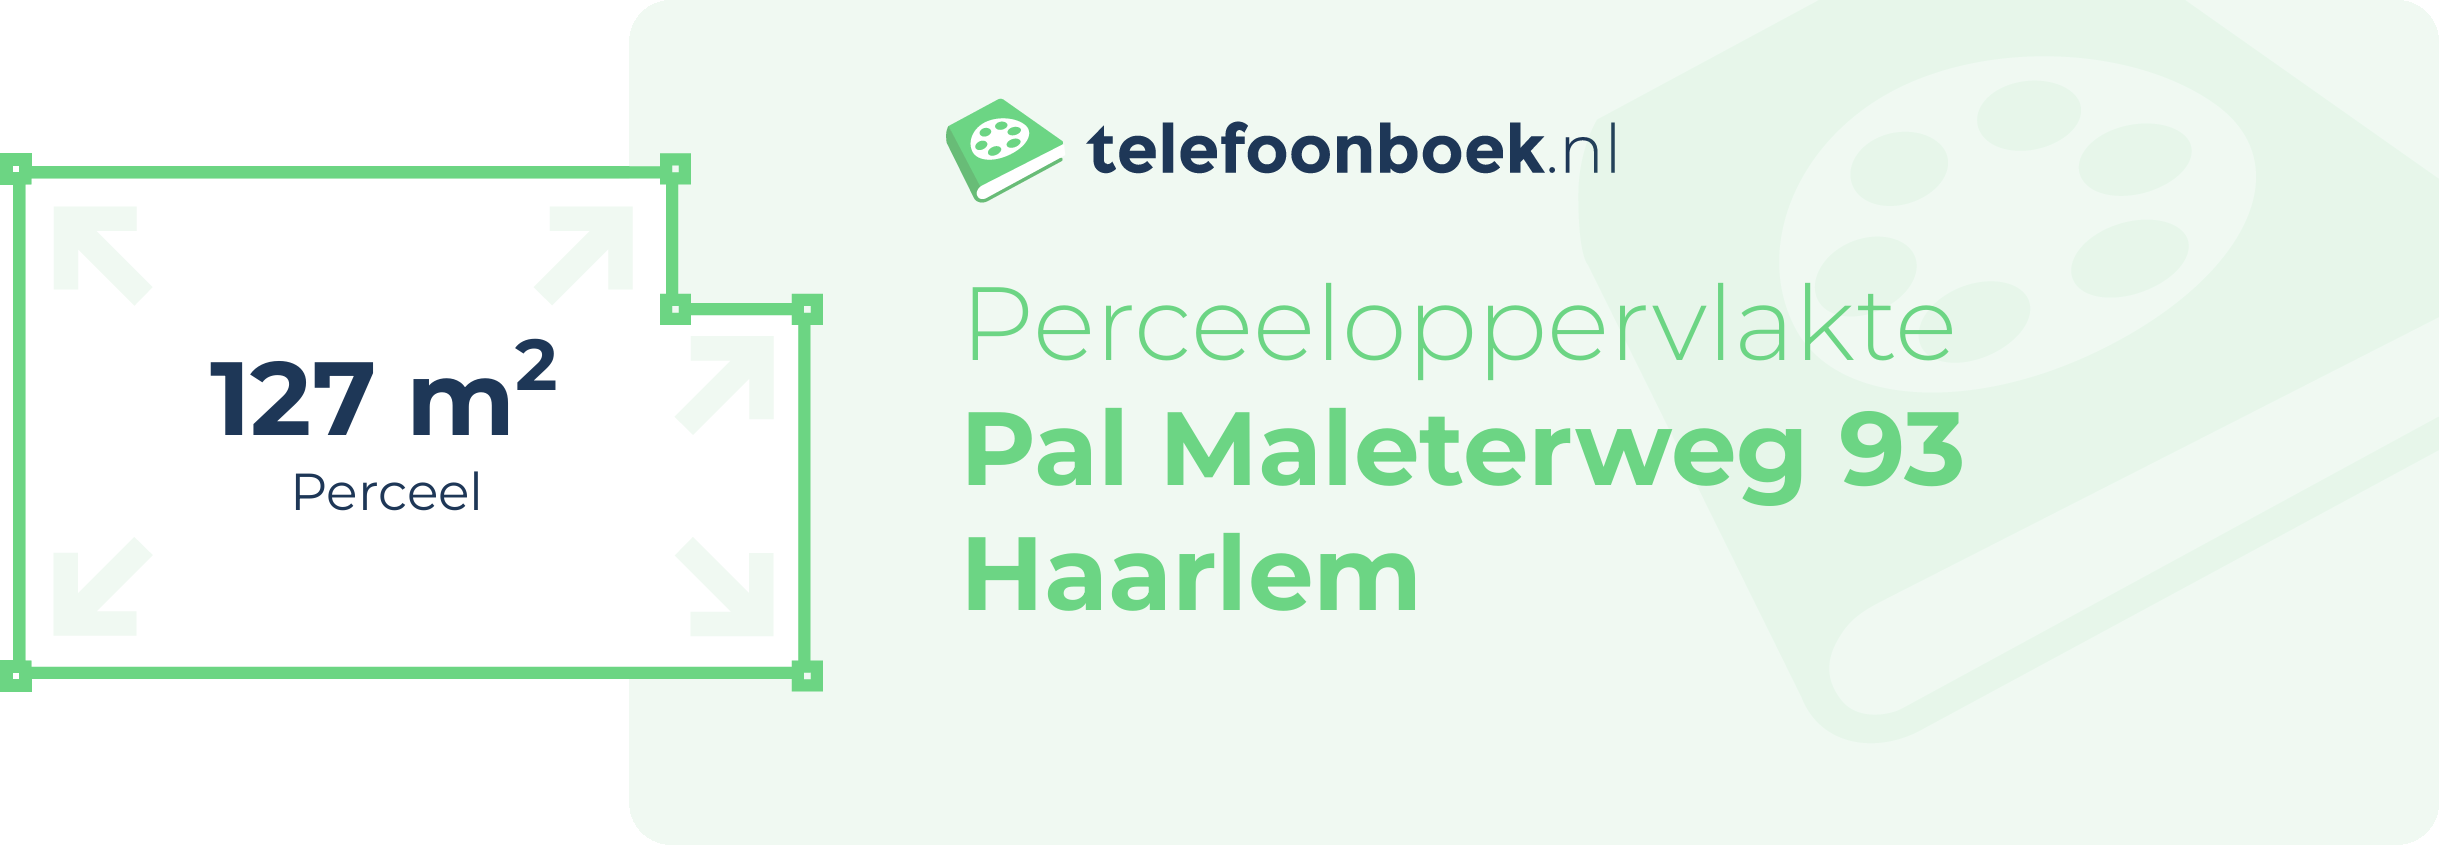 Perceeloppervlakte Pal Maleterweg 93 Haarlem